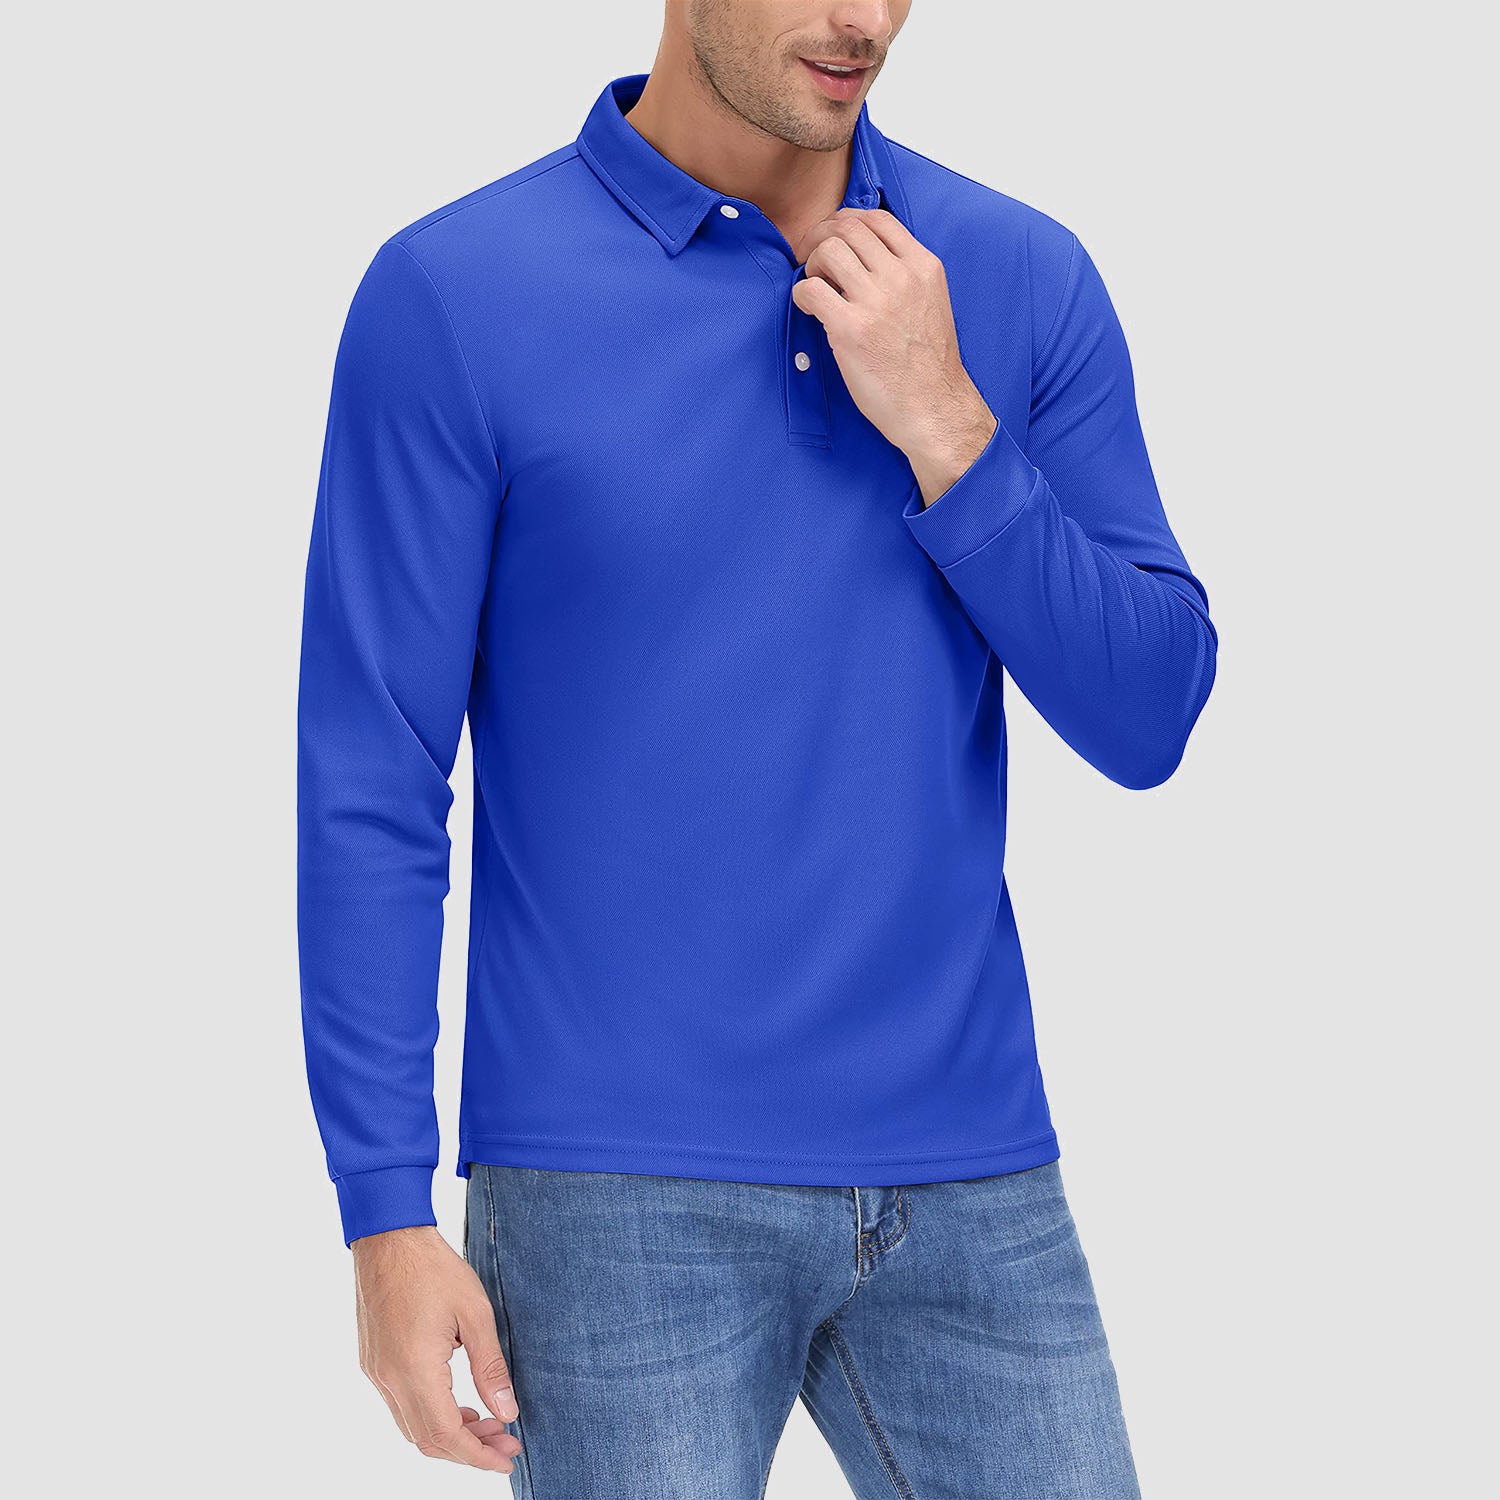 Men's Long Sleeve Polo Shirt Quick Dry Golf Shirt